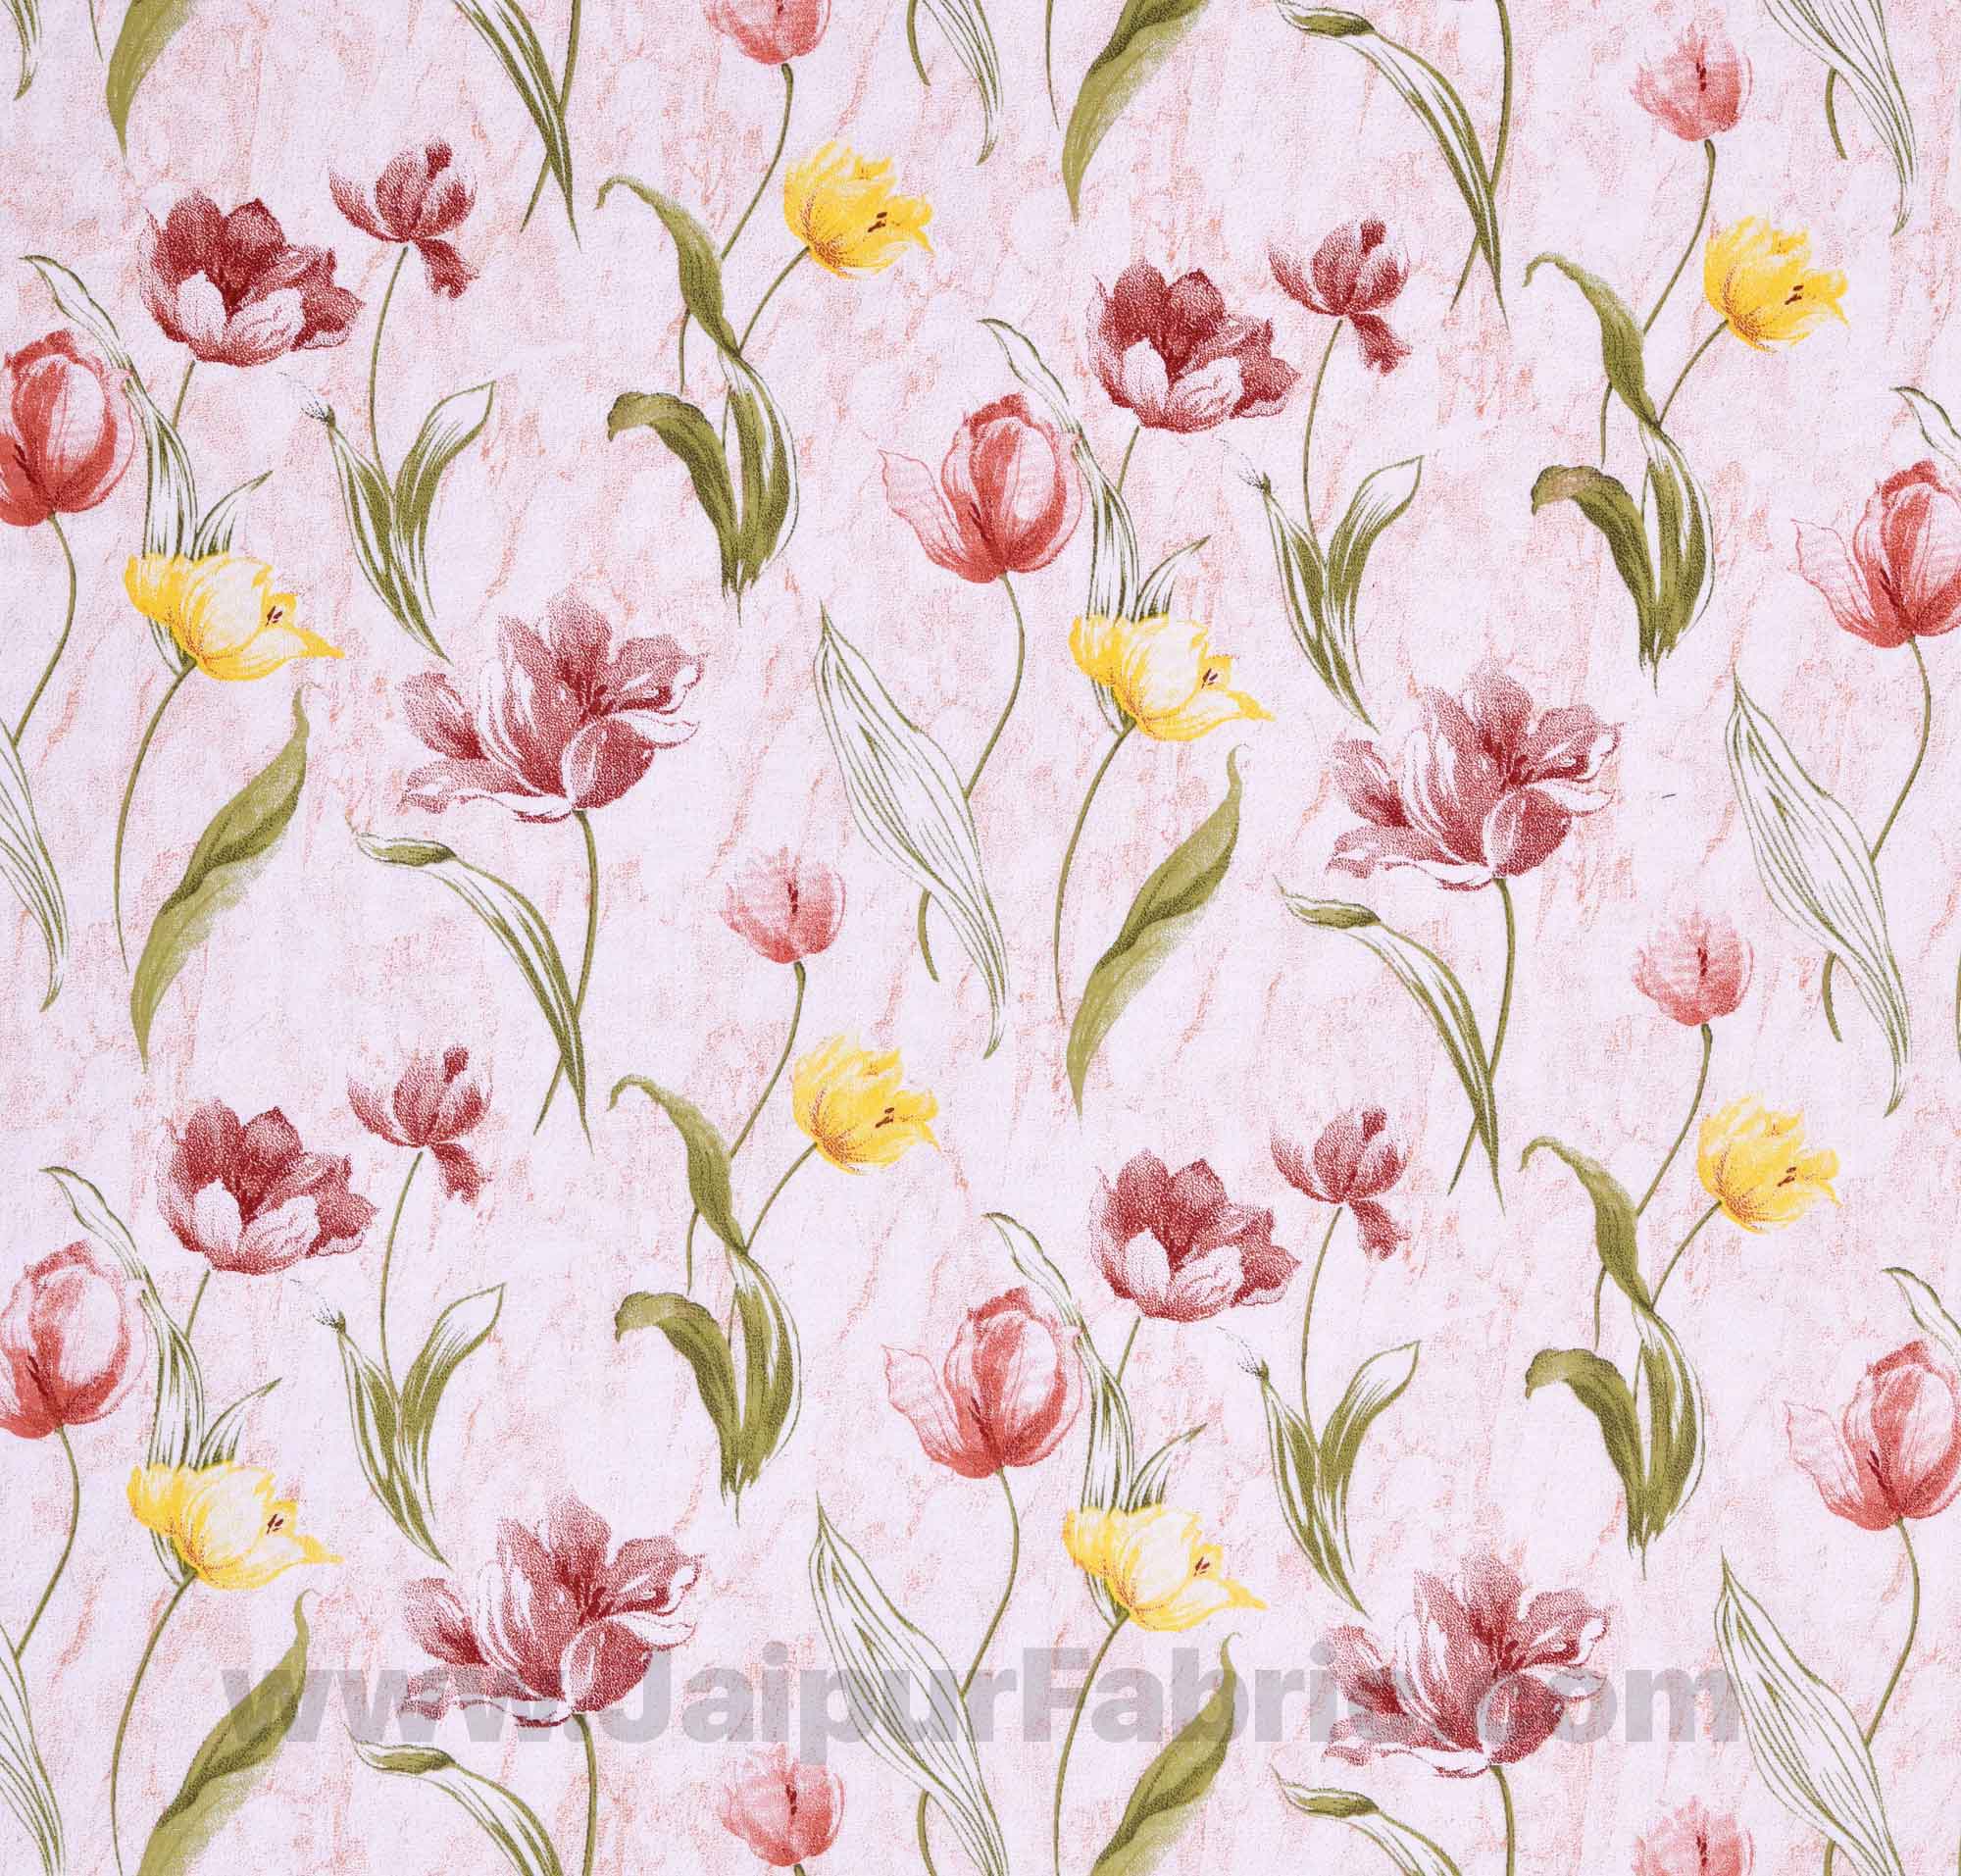 Lightweight Reversible Double Bed Dohar Pink Flower Skin Friendly Pure Cotton MulMul Blanket / AC Comforter / Summer Quilt